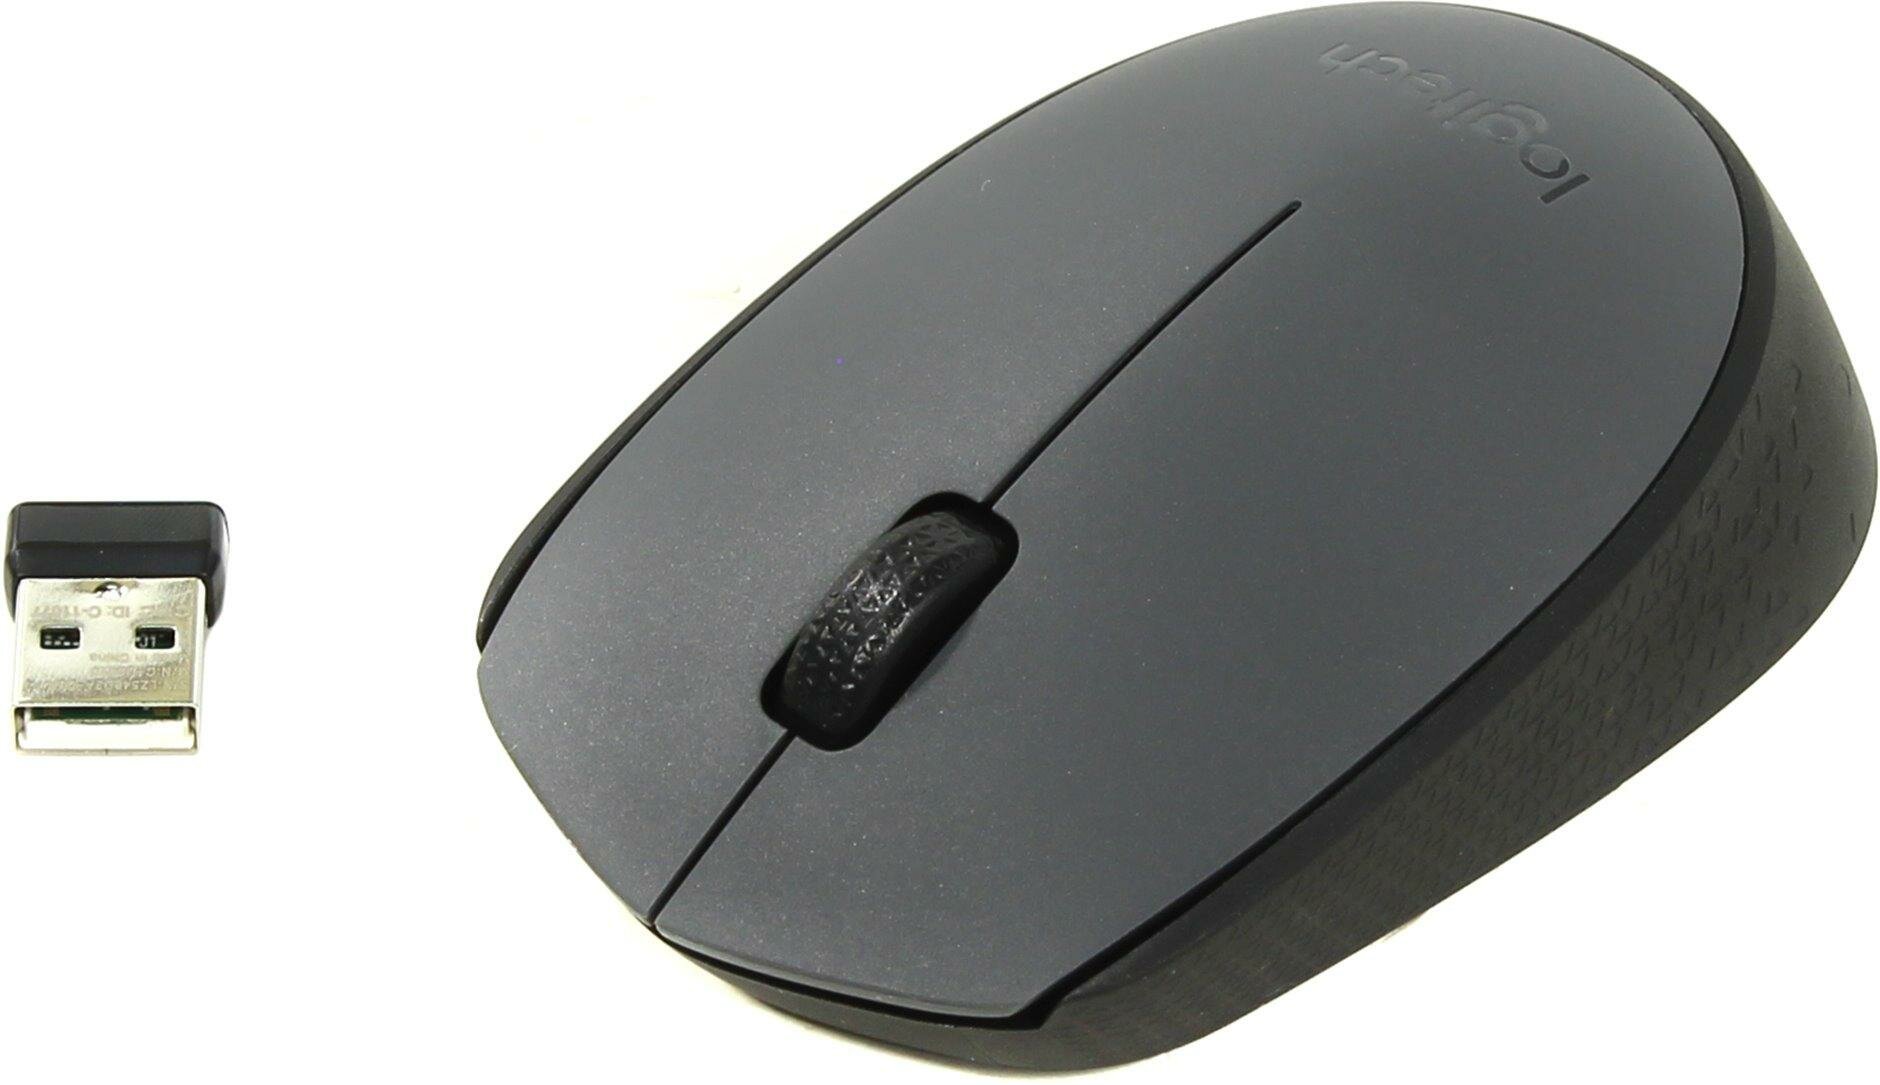 Мышь компьютерная Logitech (910-004642) Wireless Mouse M170